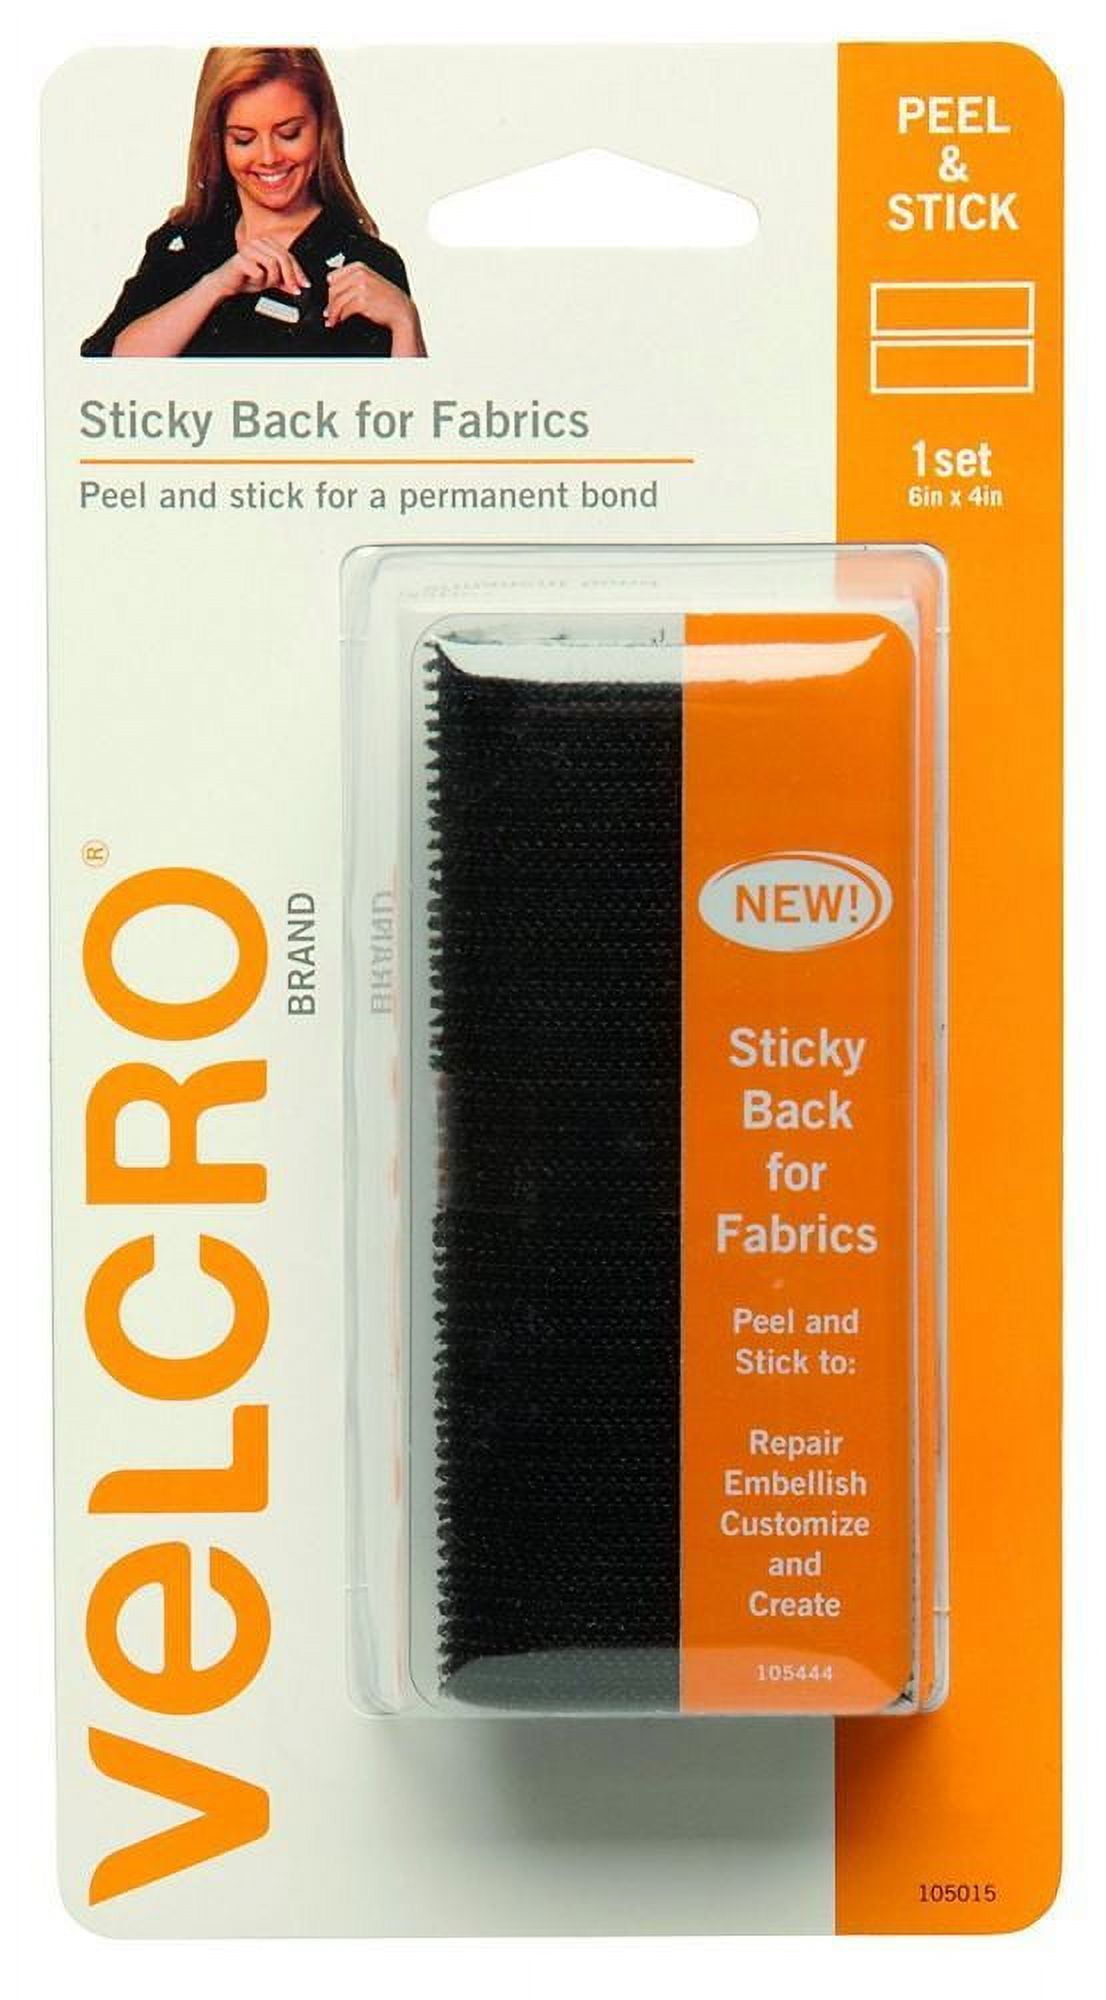 VELCRO BLACK 5/8 INCH VELCRO PATCHES WITH STICKY BACK